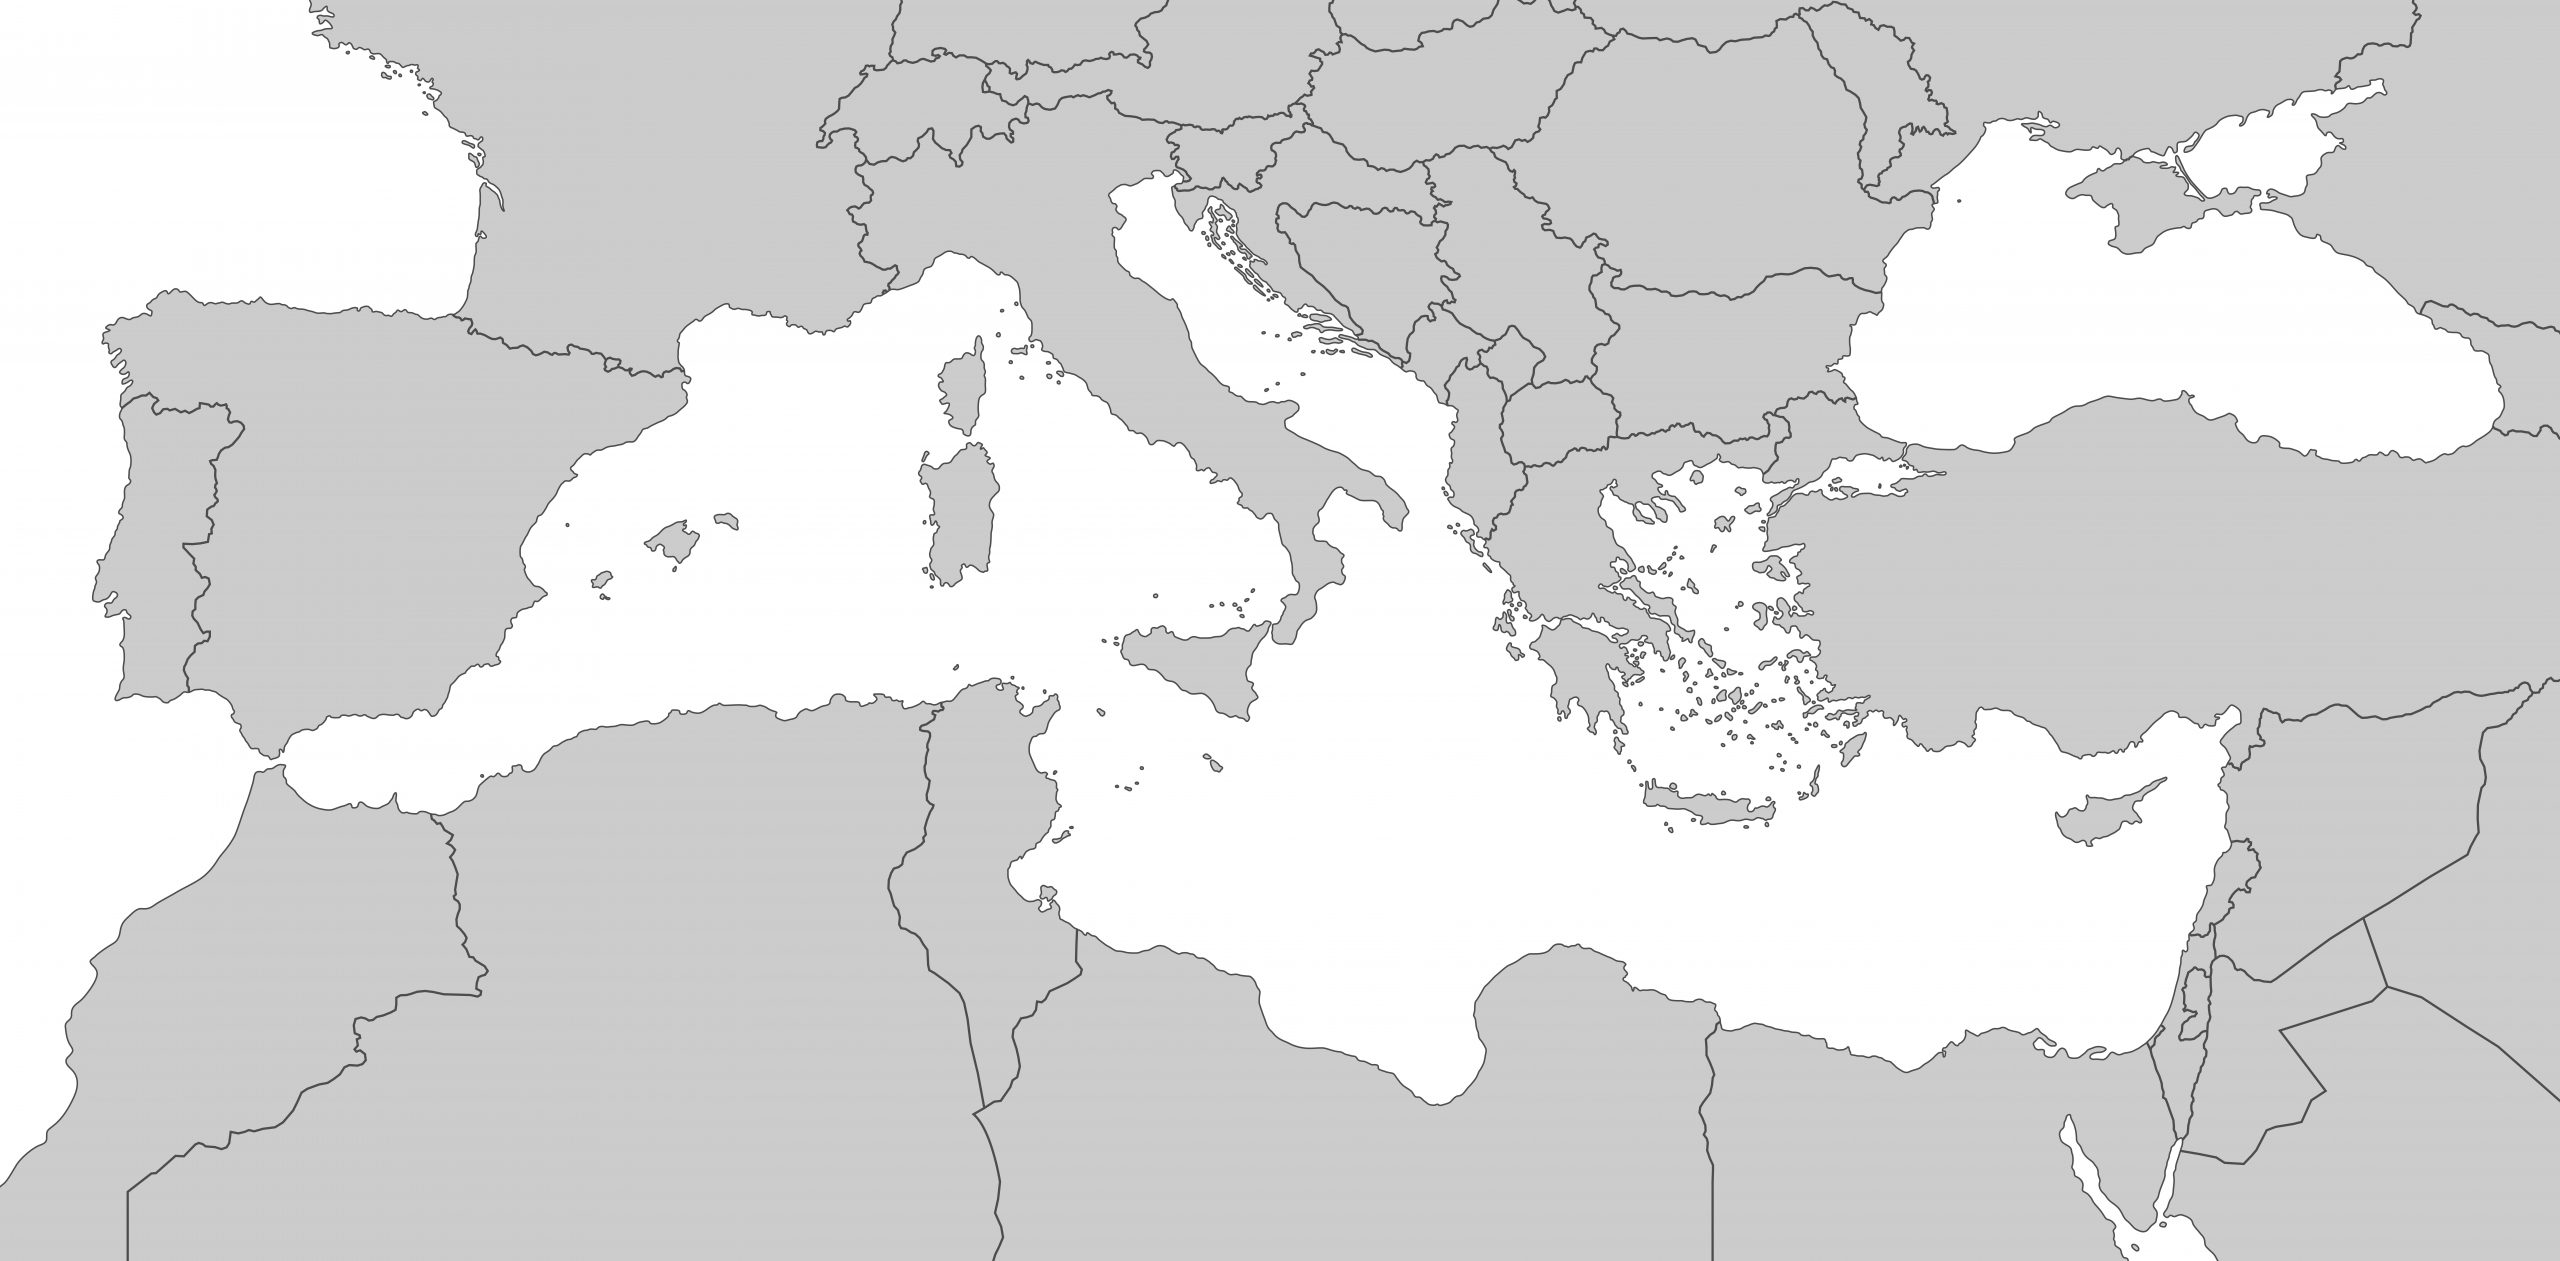 Mediterranean Basin, Central Mediterranean Area